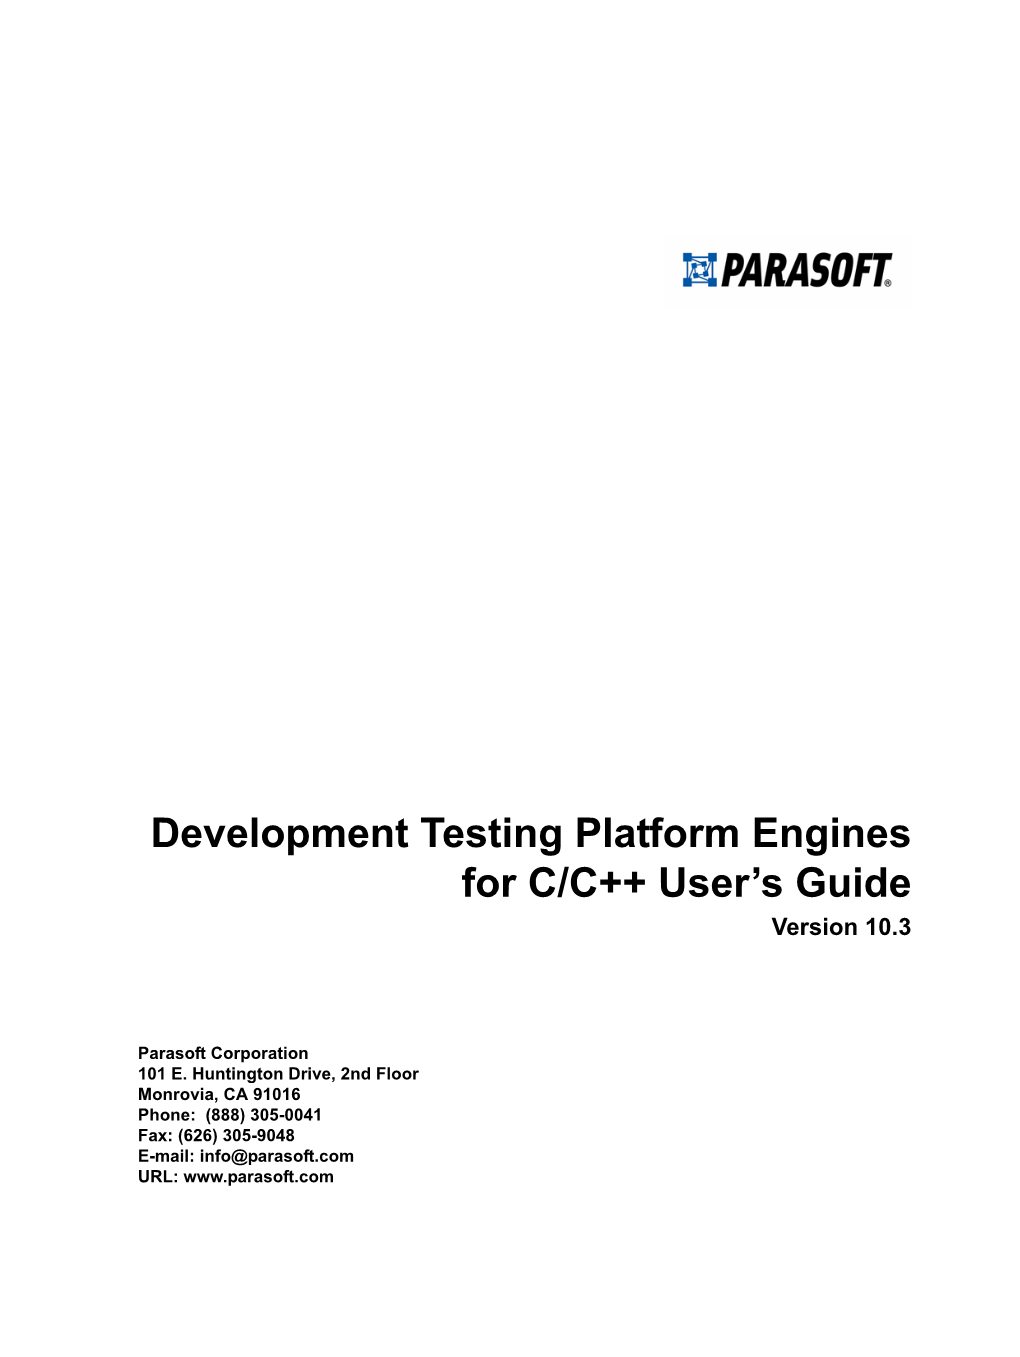 Development Testing Platform Engines for C/C++ User's Guide